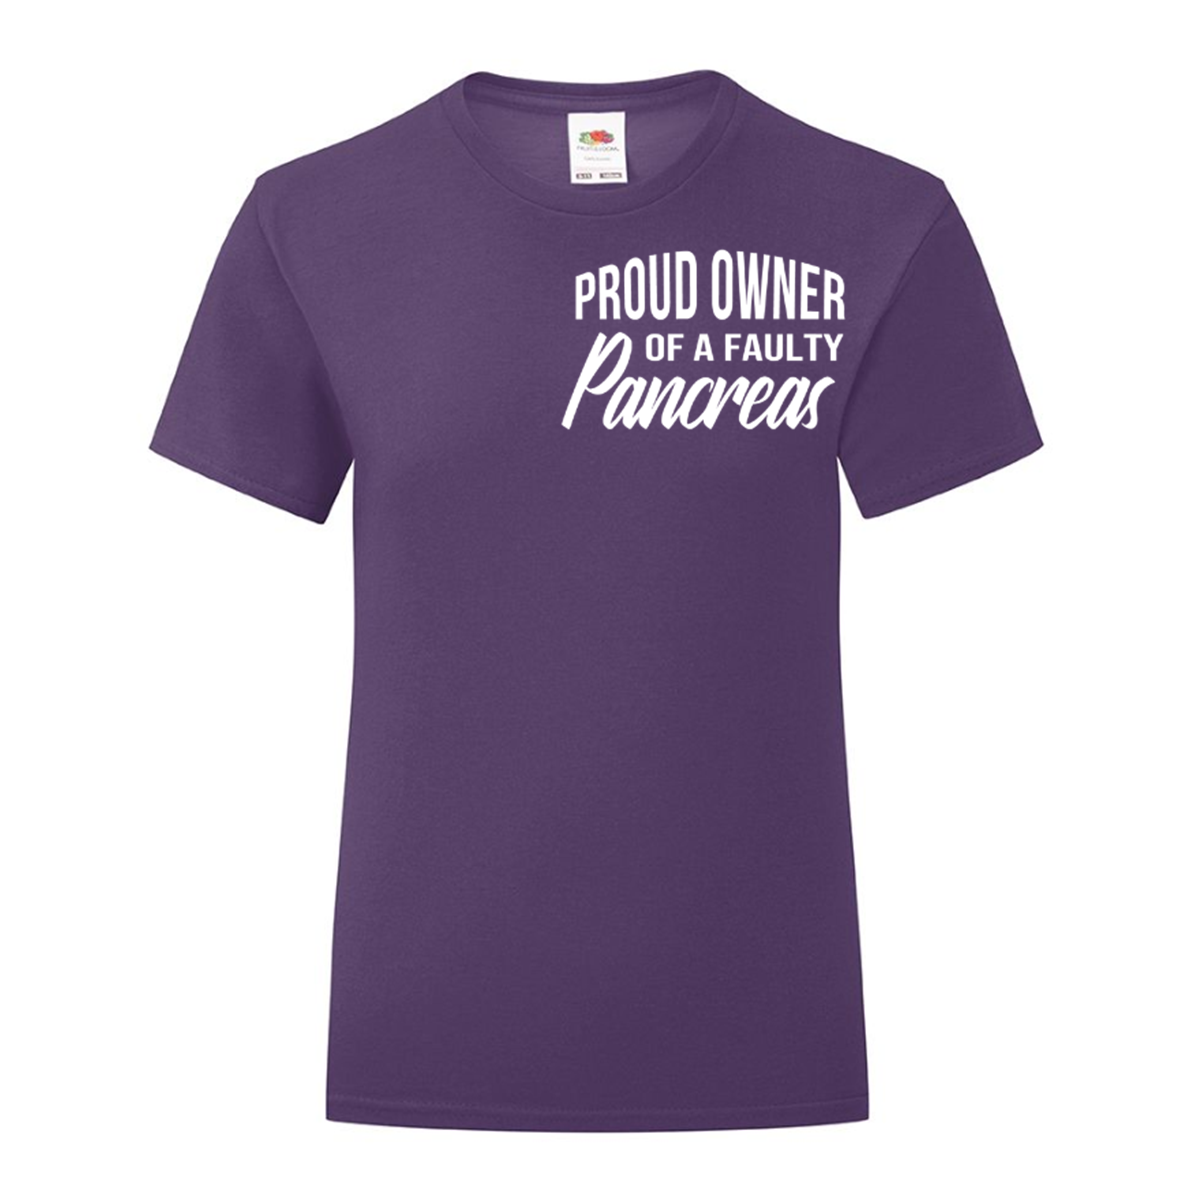 Proud Owner Of A Faulty Pancreas Kids T Shirt